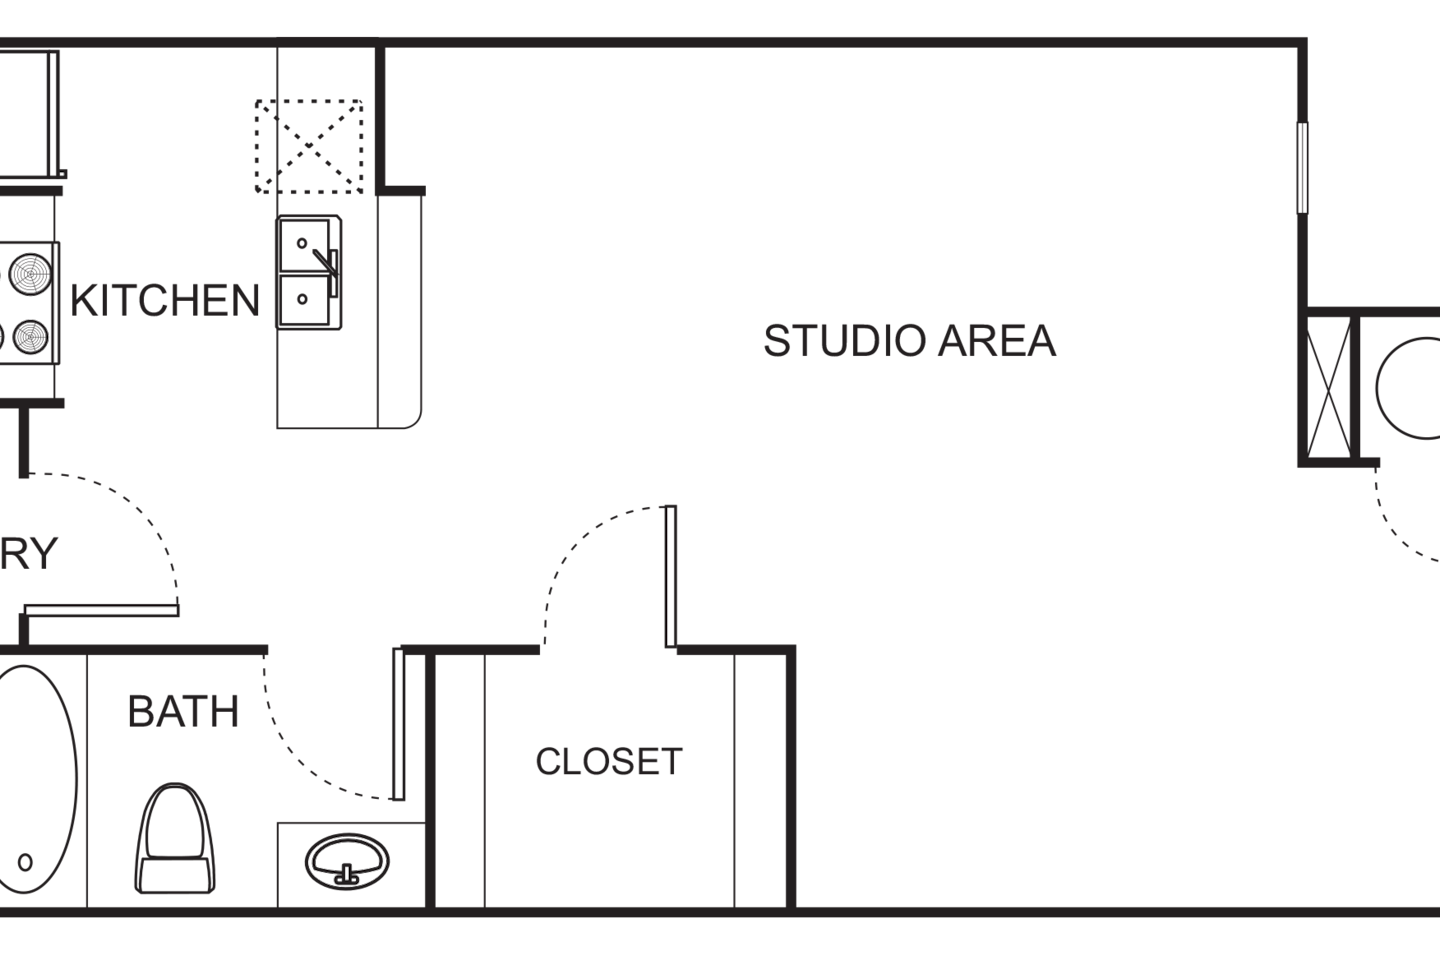 Floorplan diagram for S2-A Studio, showing Studio